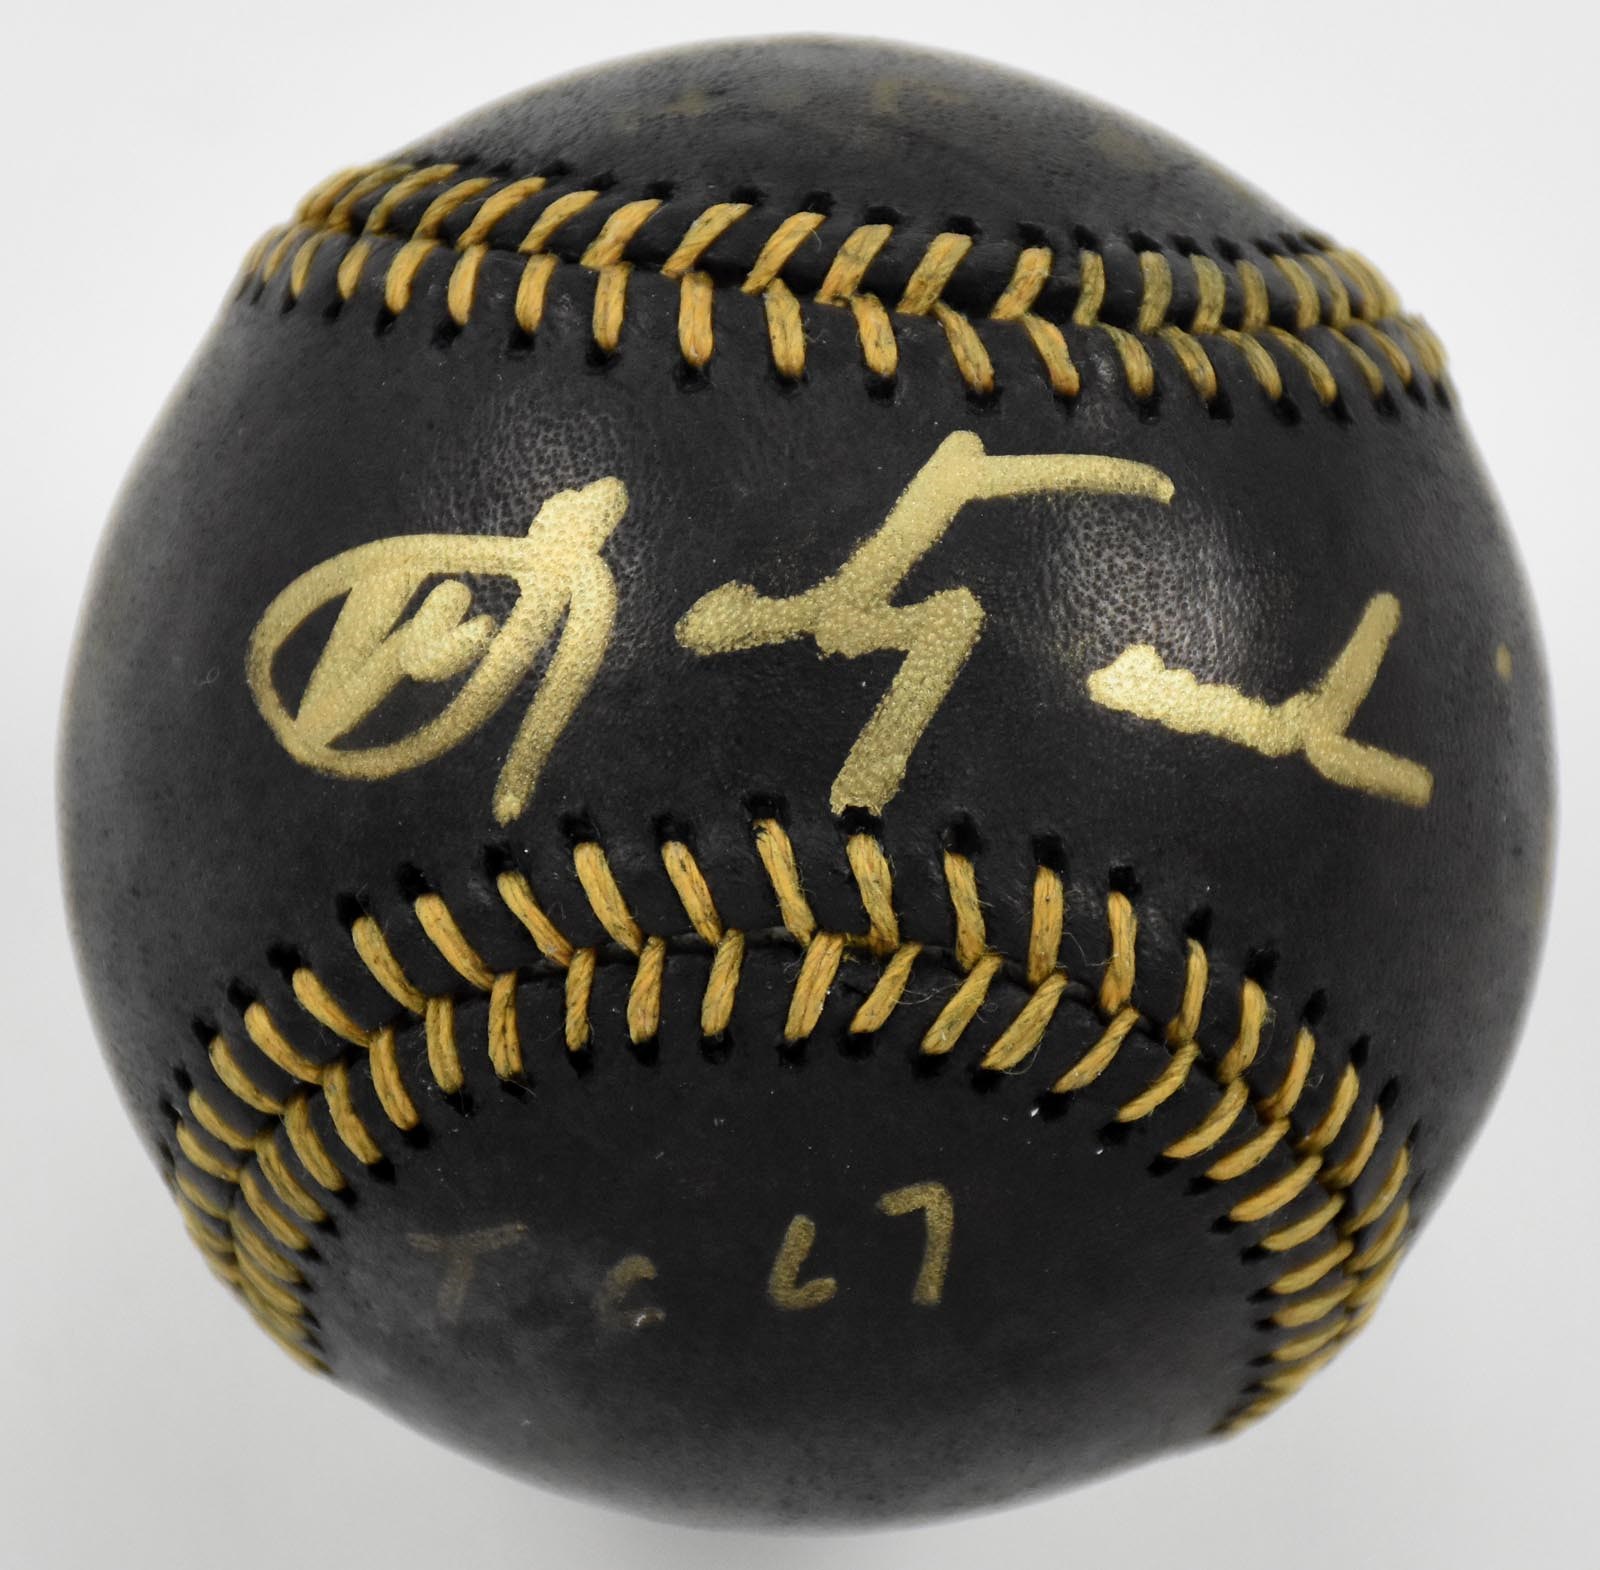 Boston Sports - Carl Yastrzemski Signed 4x Stat Black Leather Baseball (PSA Graded MINT+ 9.5)